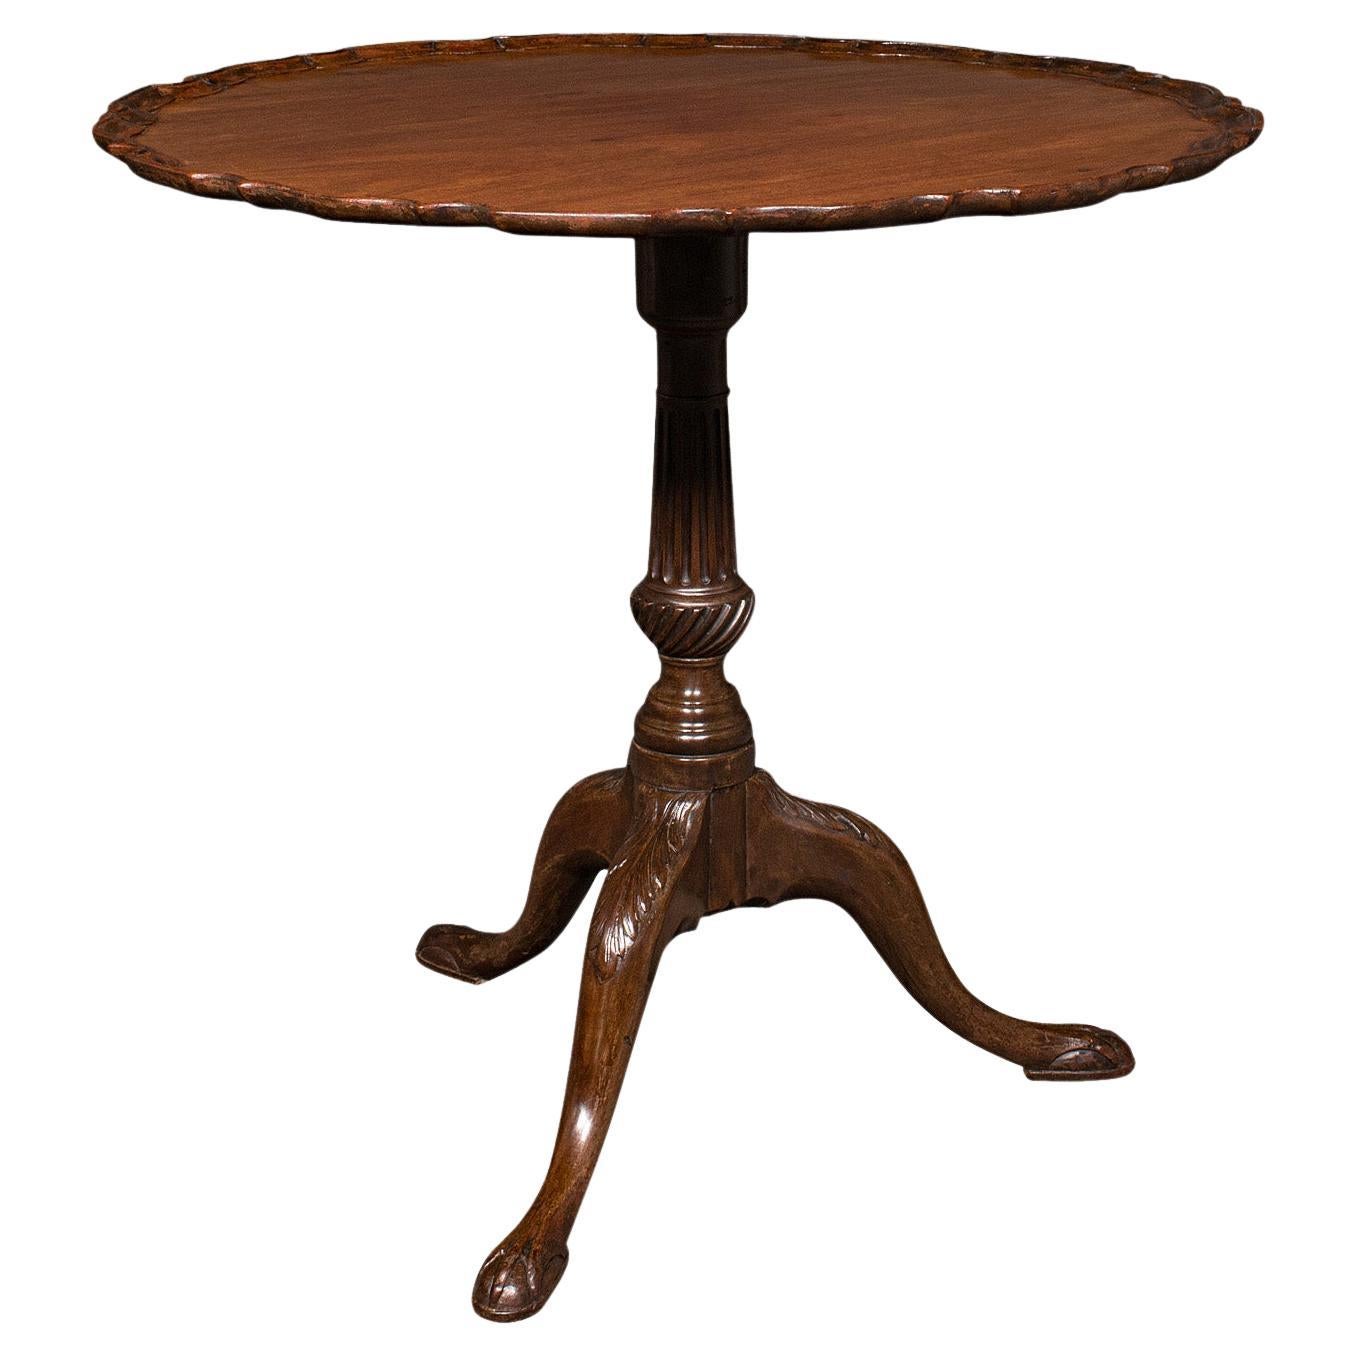 Antique Pie Crust Lamp Table, English, Tilt Top, Occasional, Victorian, C.1870 For Sale